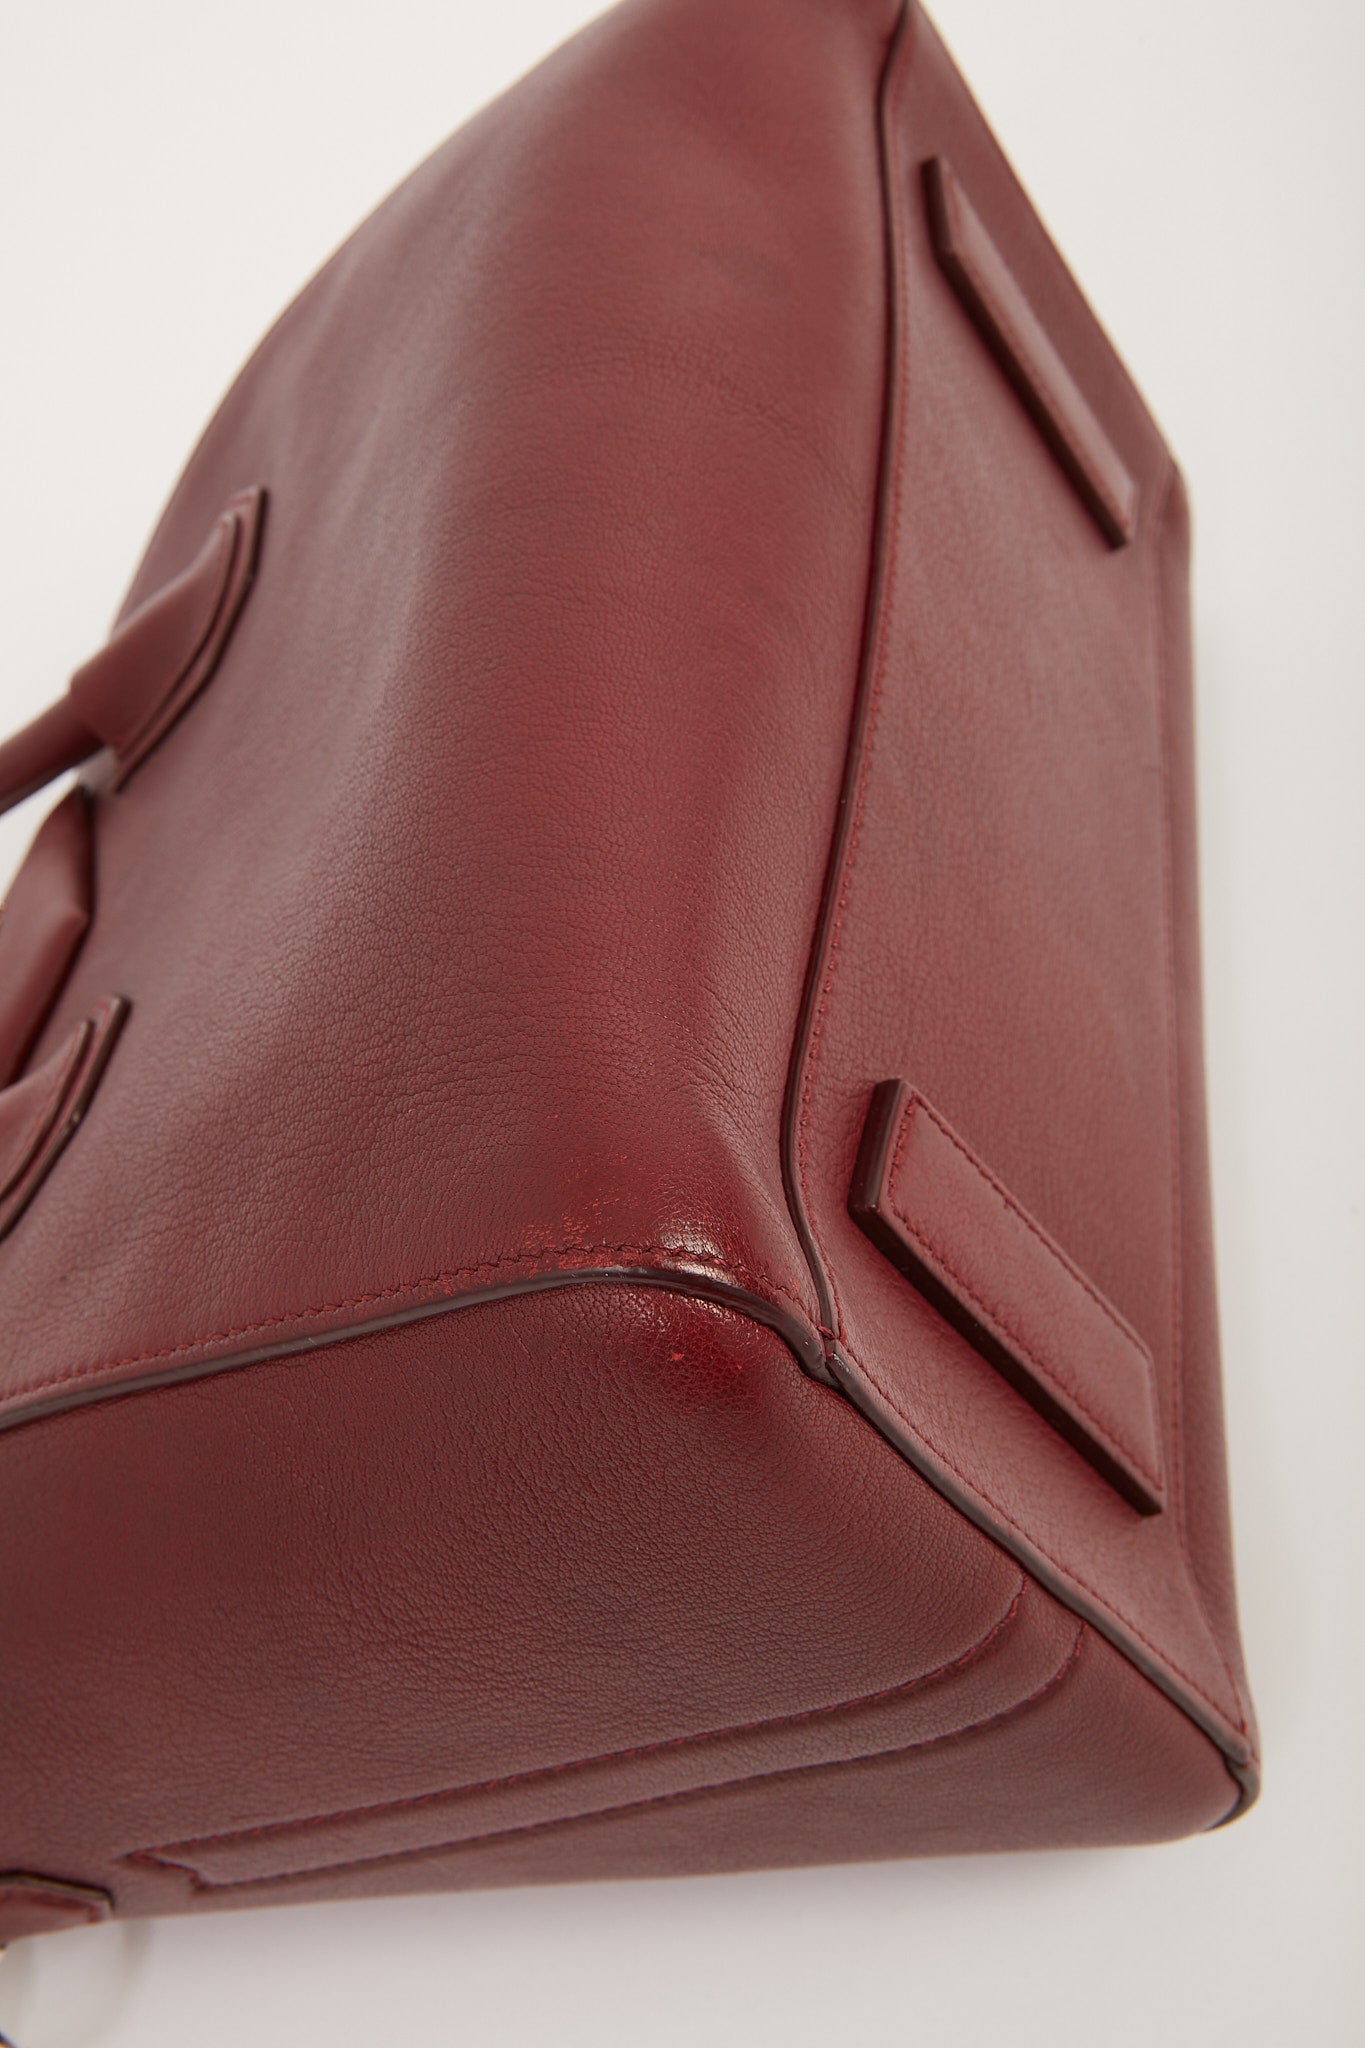 Givenchy Burgundy Grained Leather Small Antigona Bag